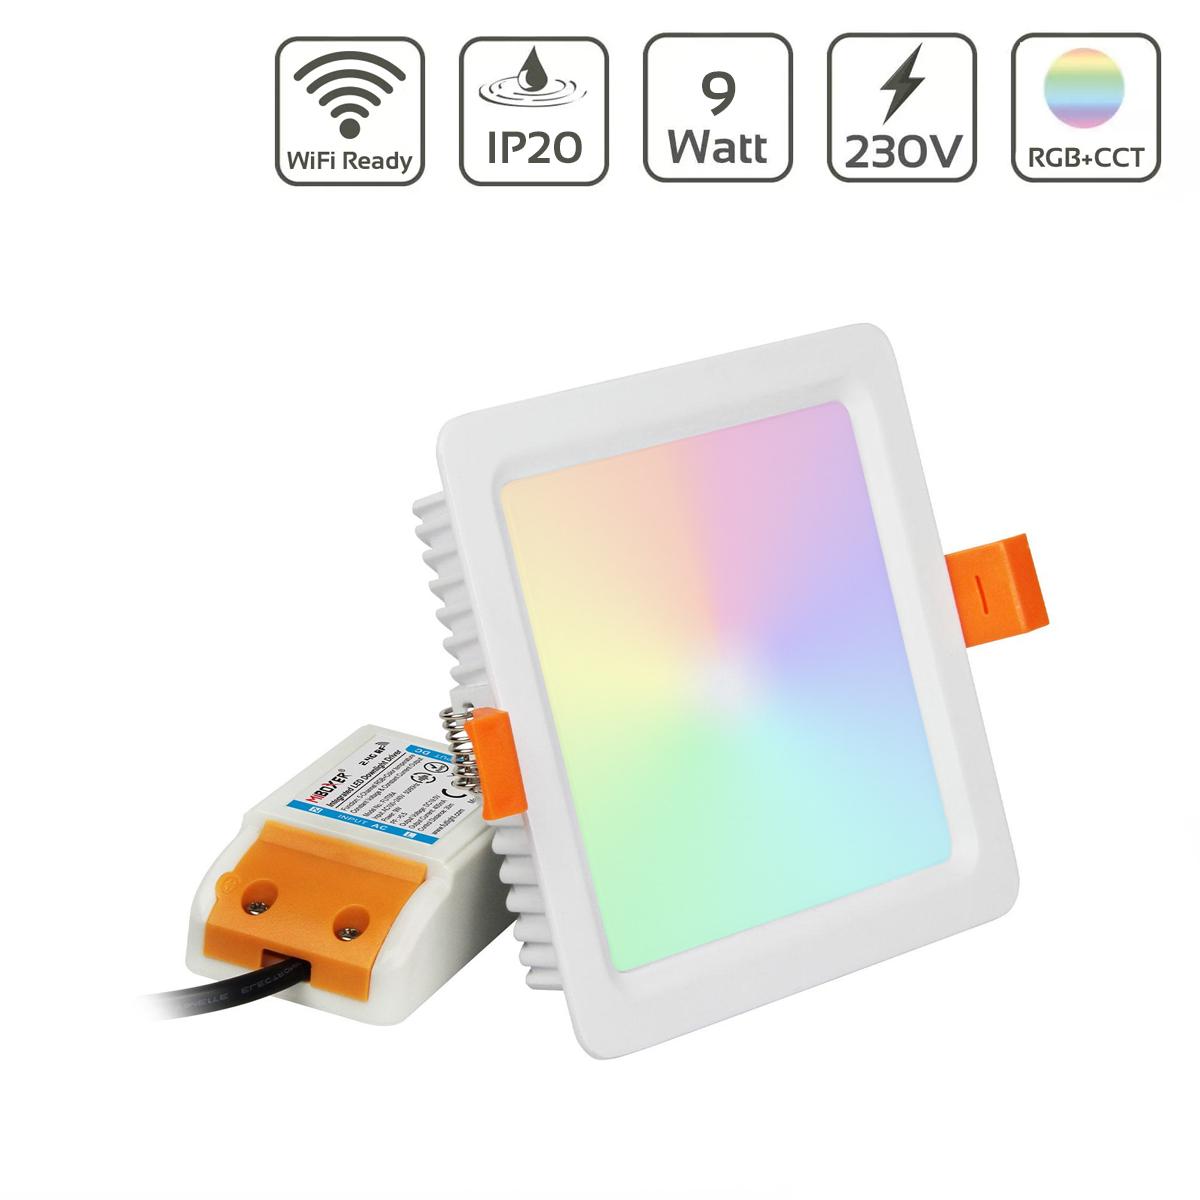 MiBoxer RGB+CCT LED Einbaustrahler eckig weiss 9W 120x120mm 2.4GHz WiFiready FUT064